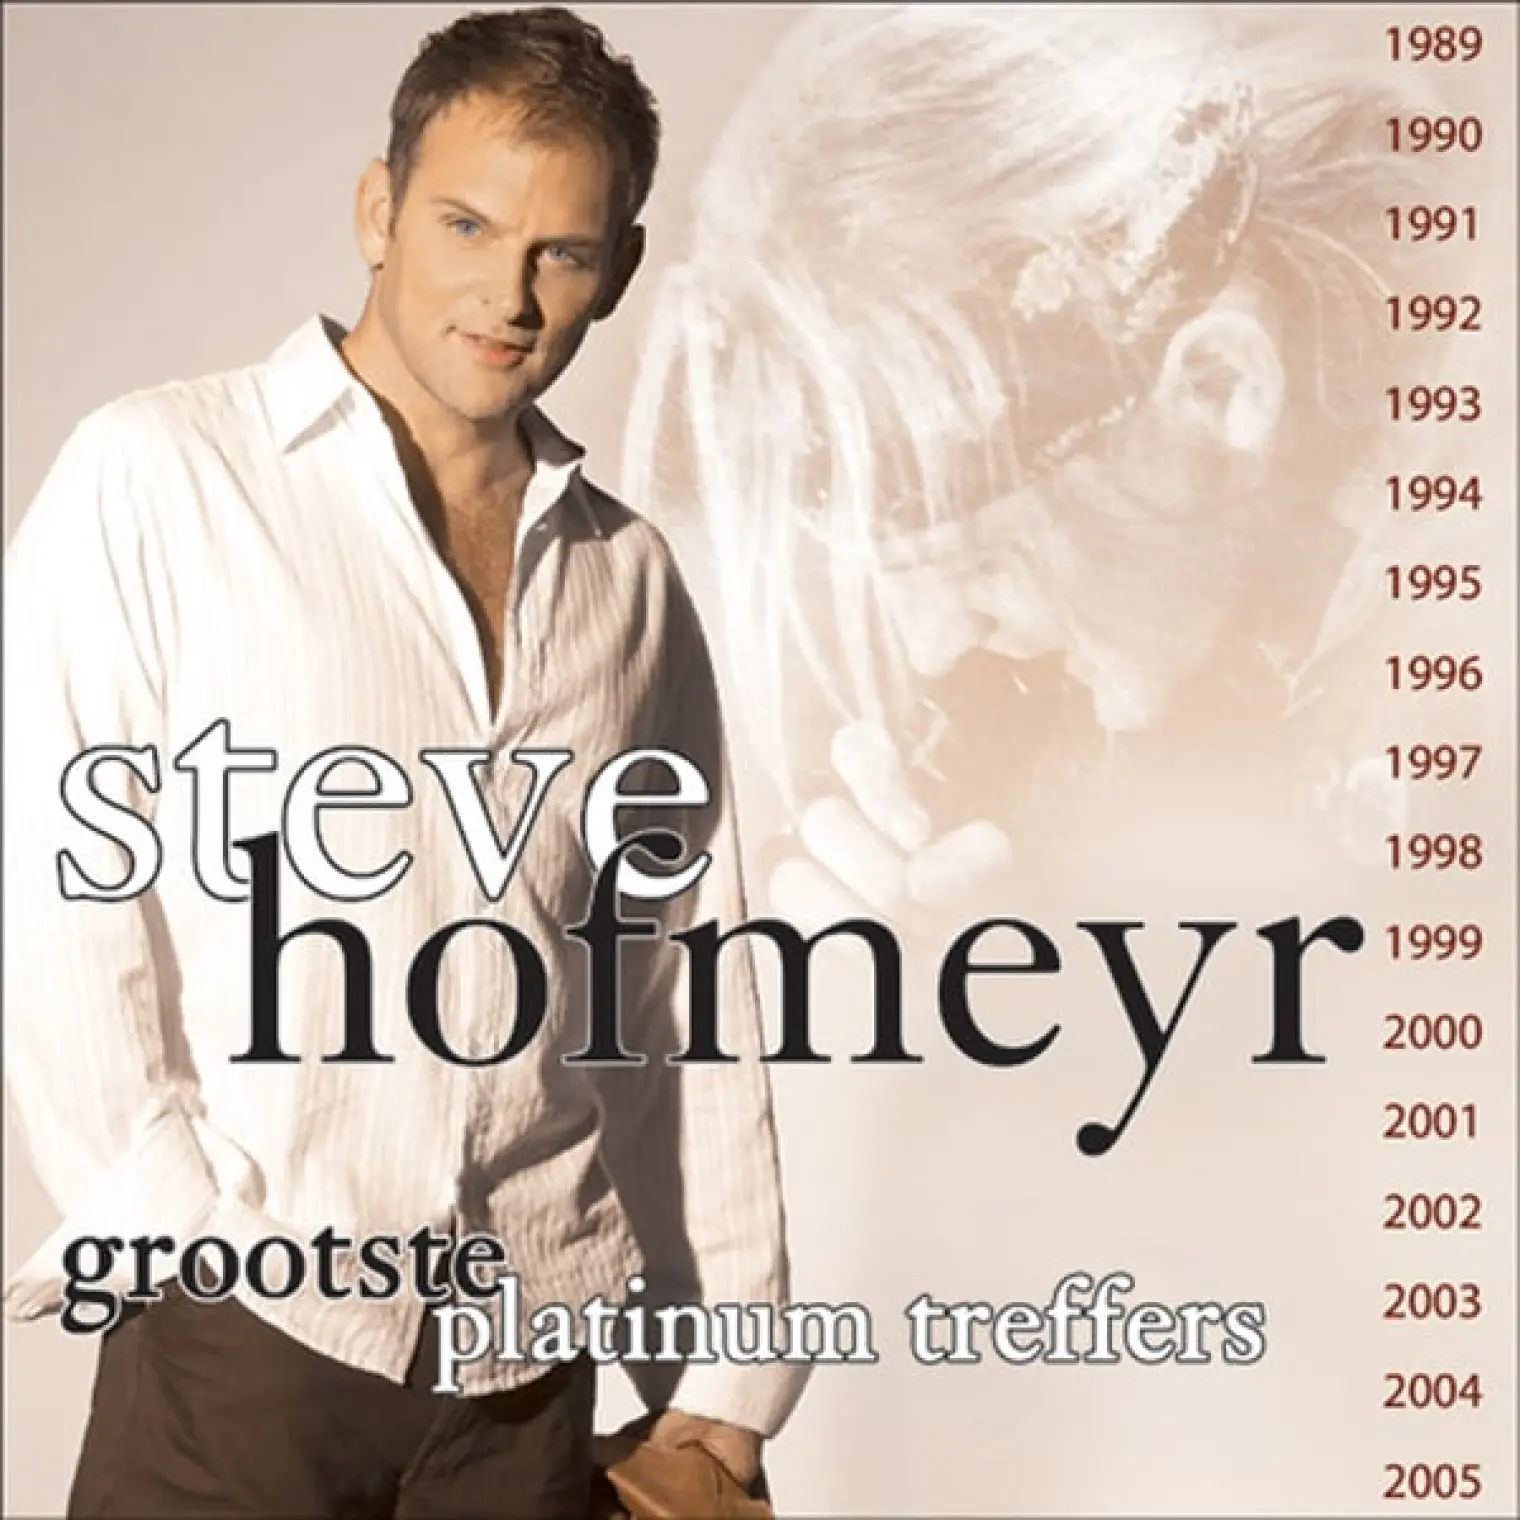 Grootste Platinum Treffers -  Steve Hofmeyr 